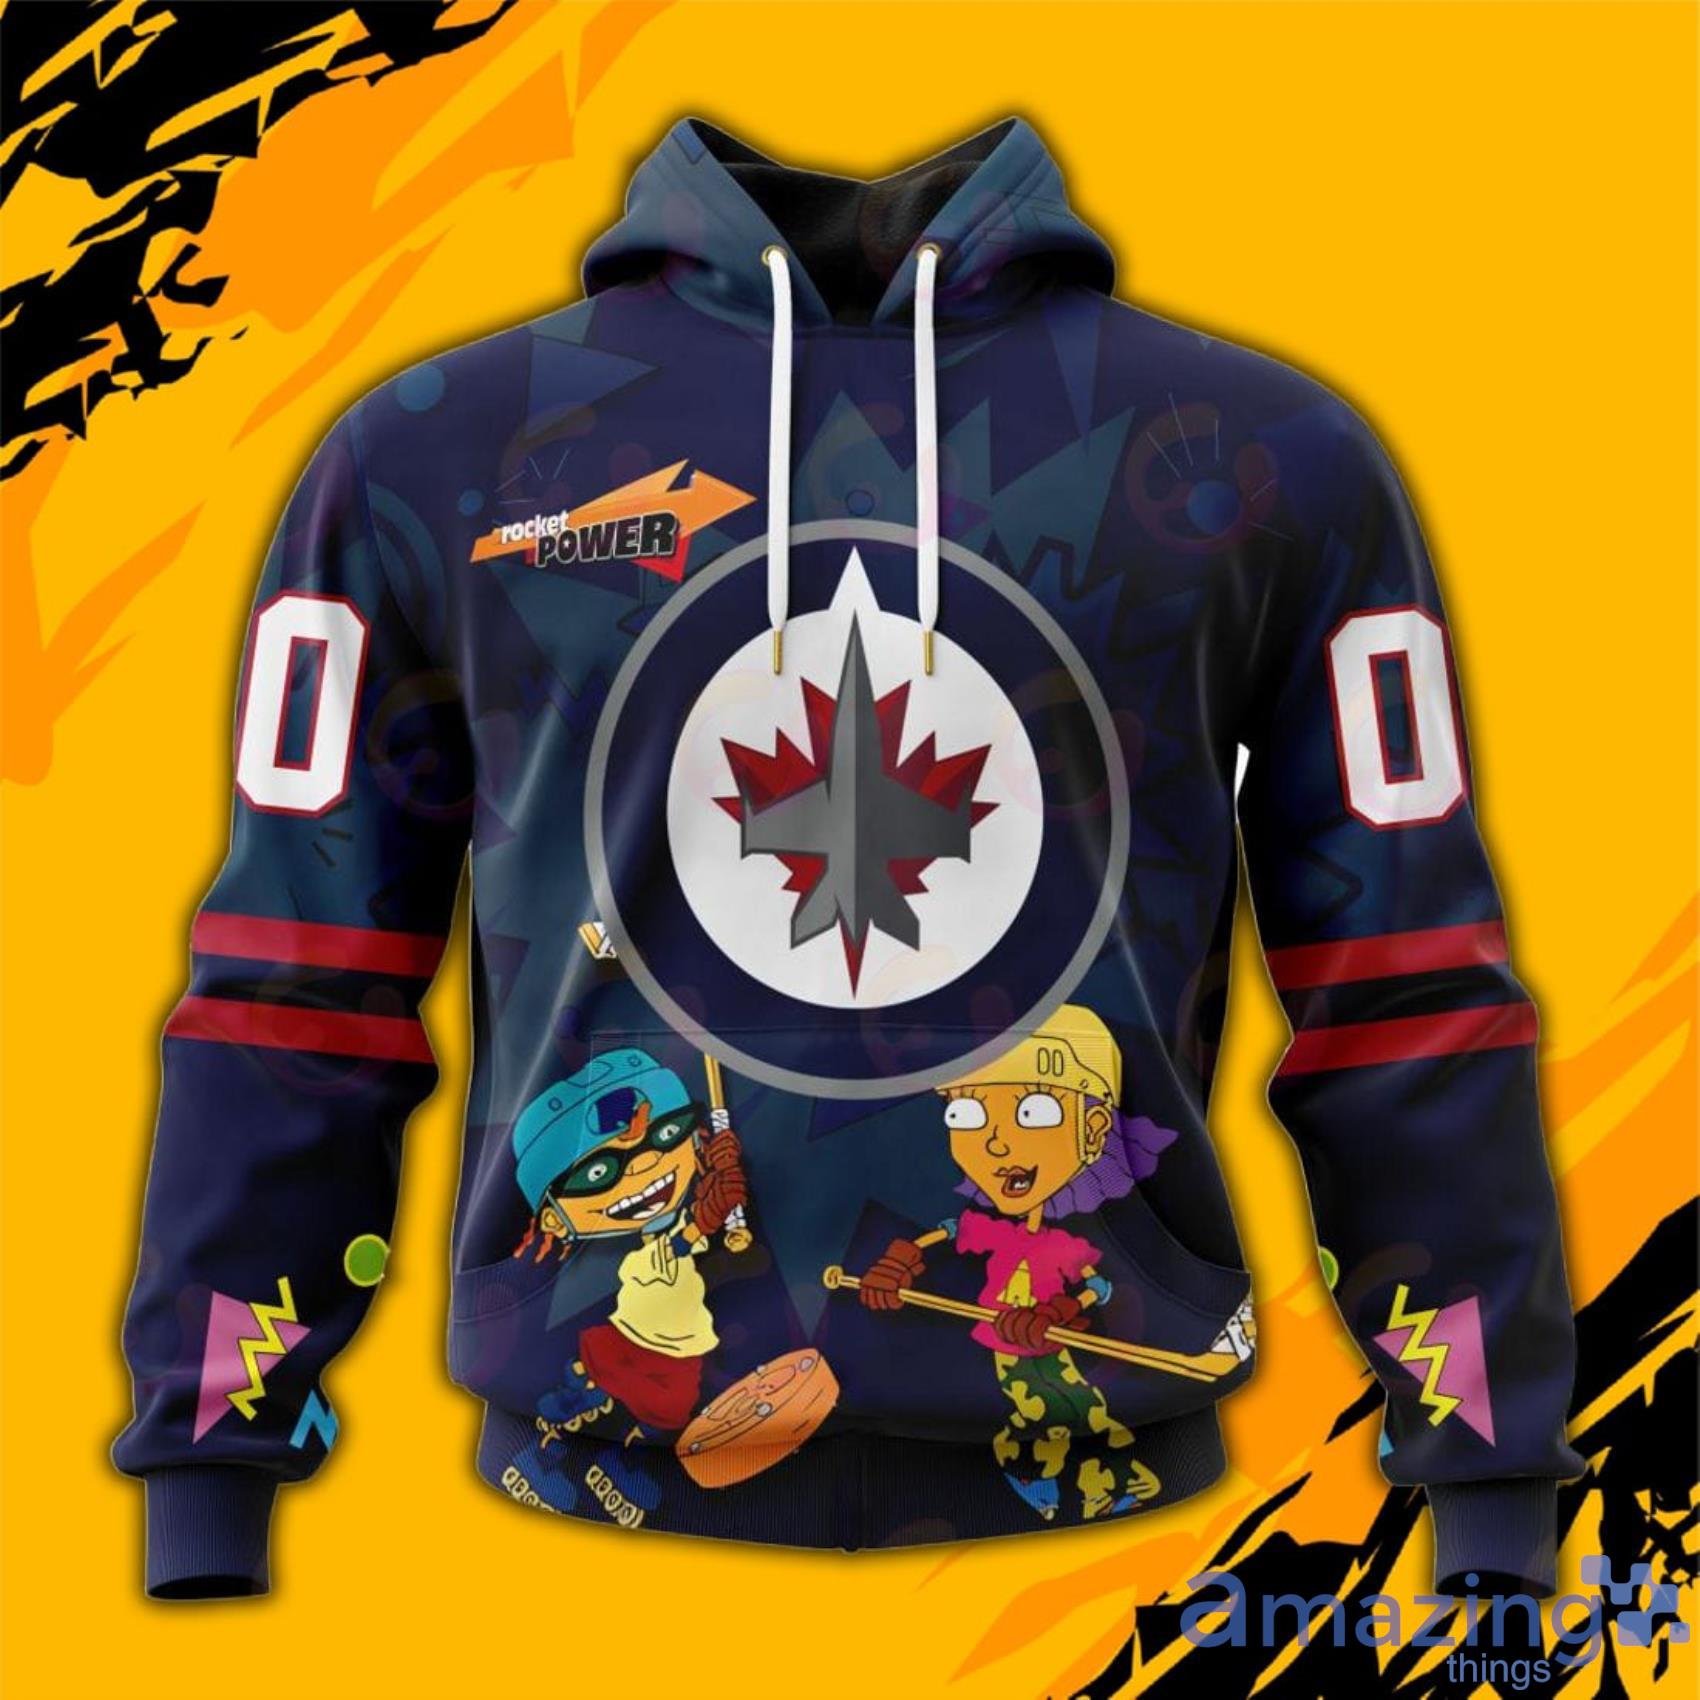 Custom Winnipeg Jets Jerseys, Customized Jets Shirts, Hoodies, Merchandise